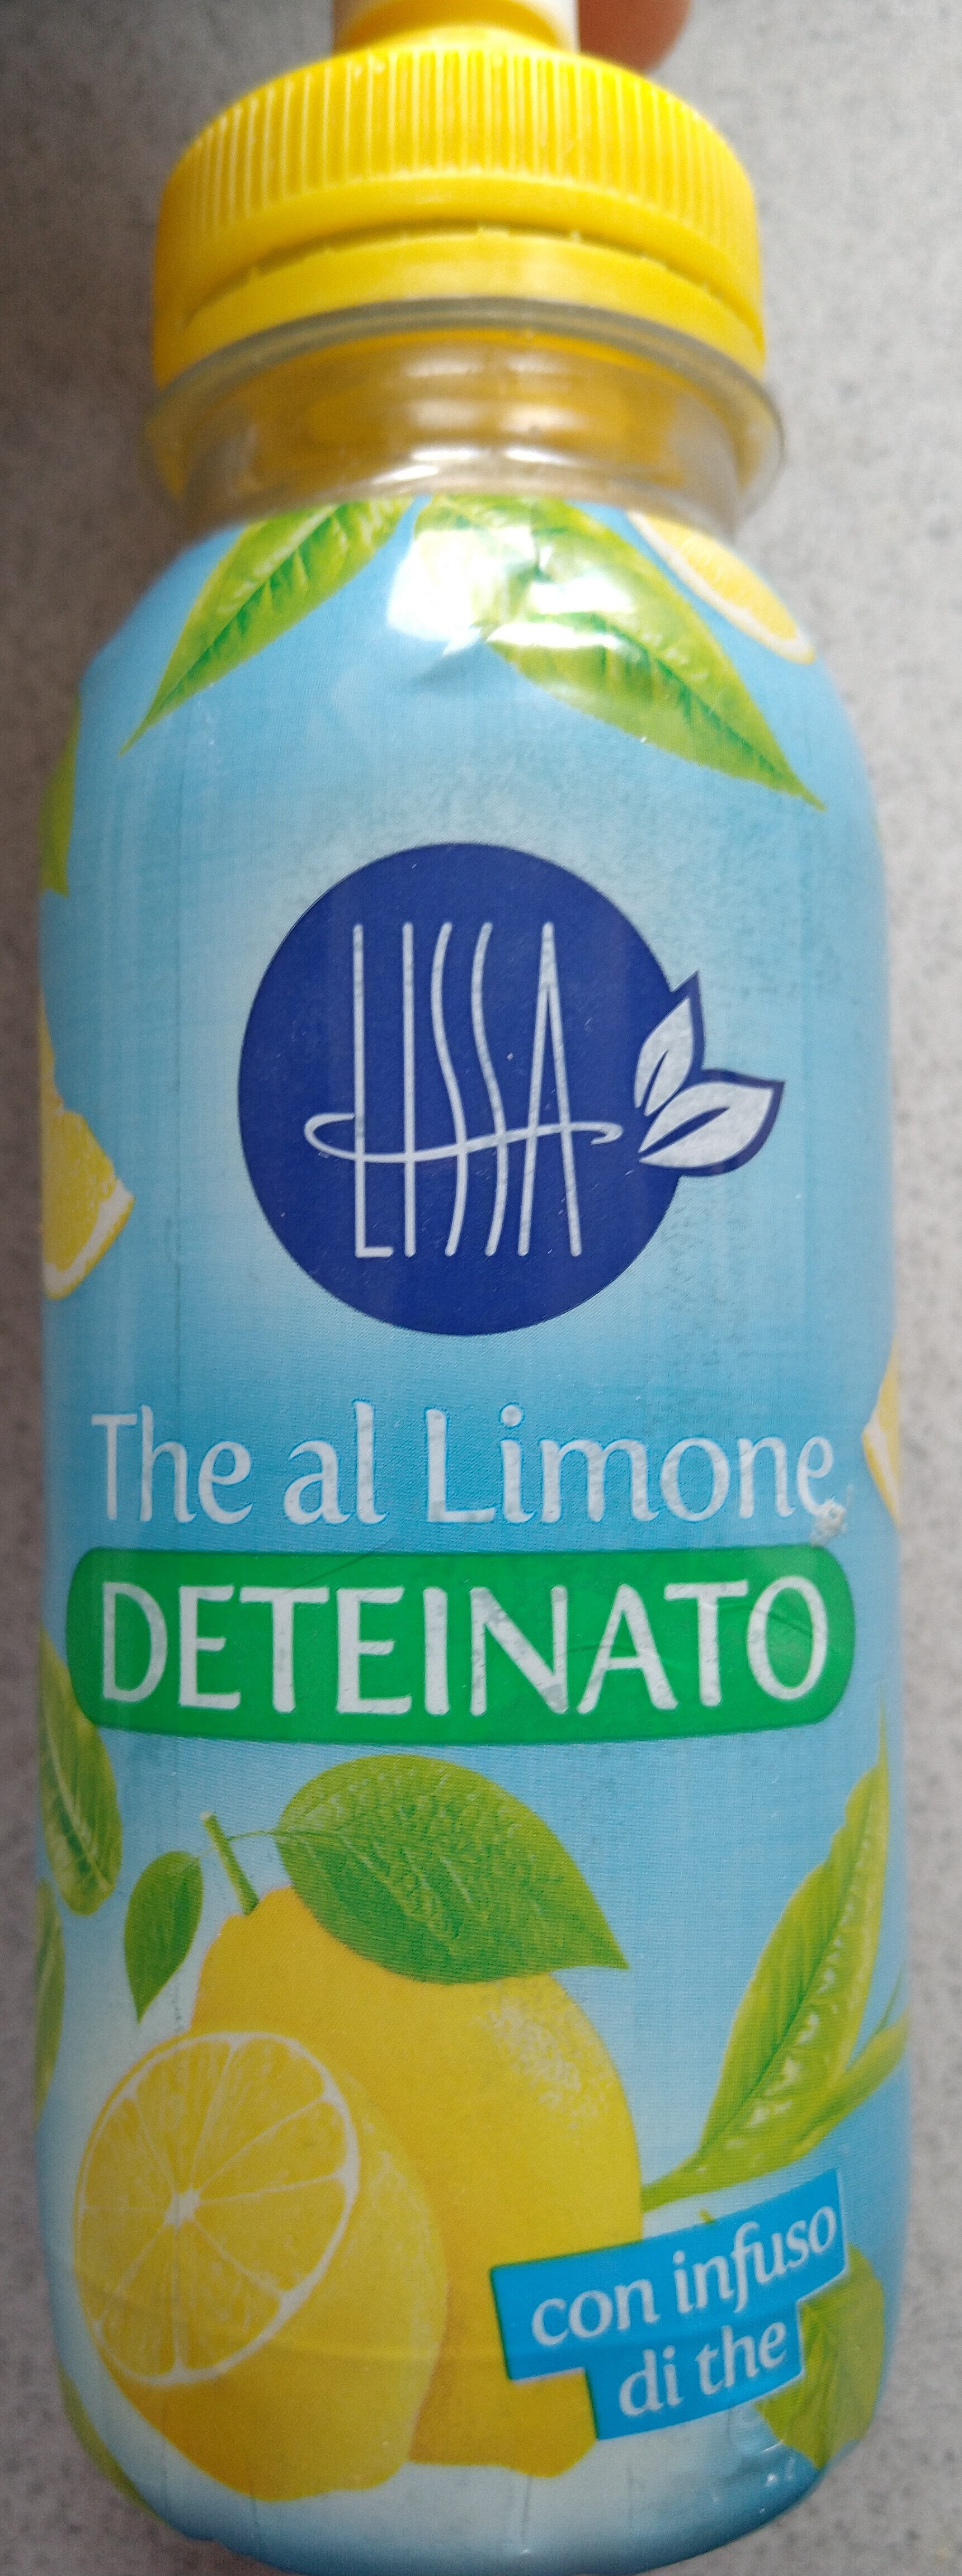 The al limone - Product - it